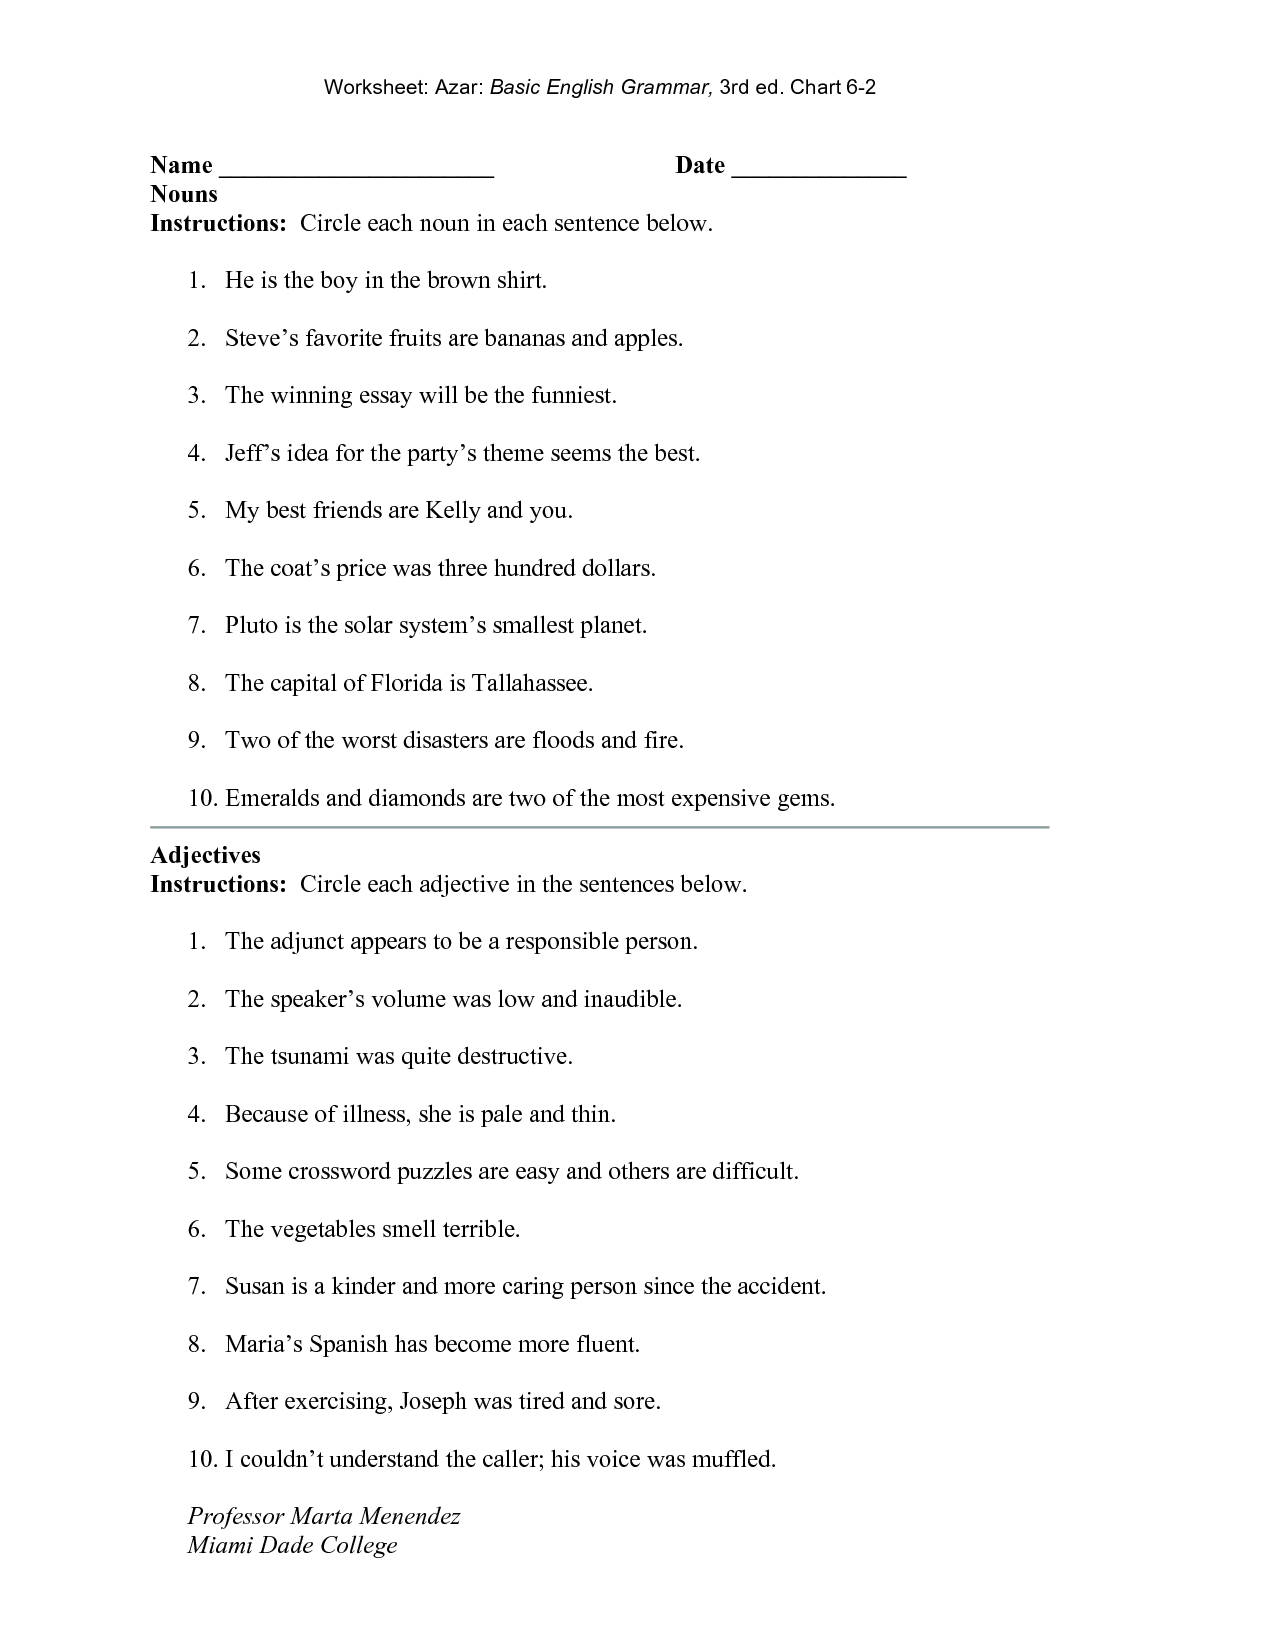 Basic English Grammar Worksheets Image